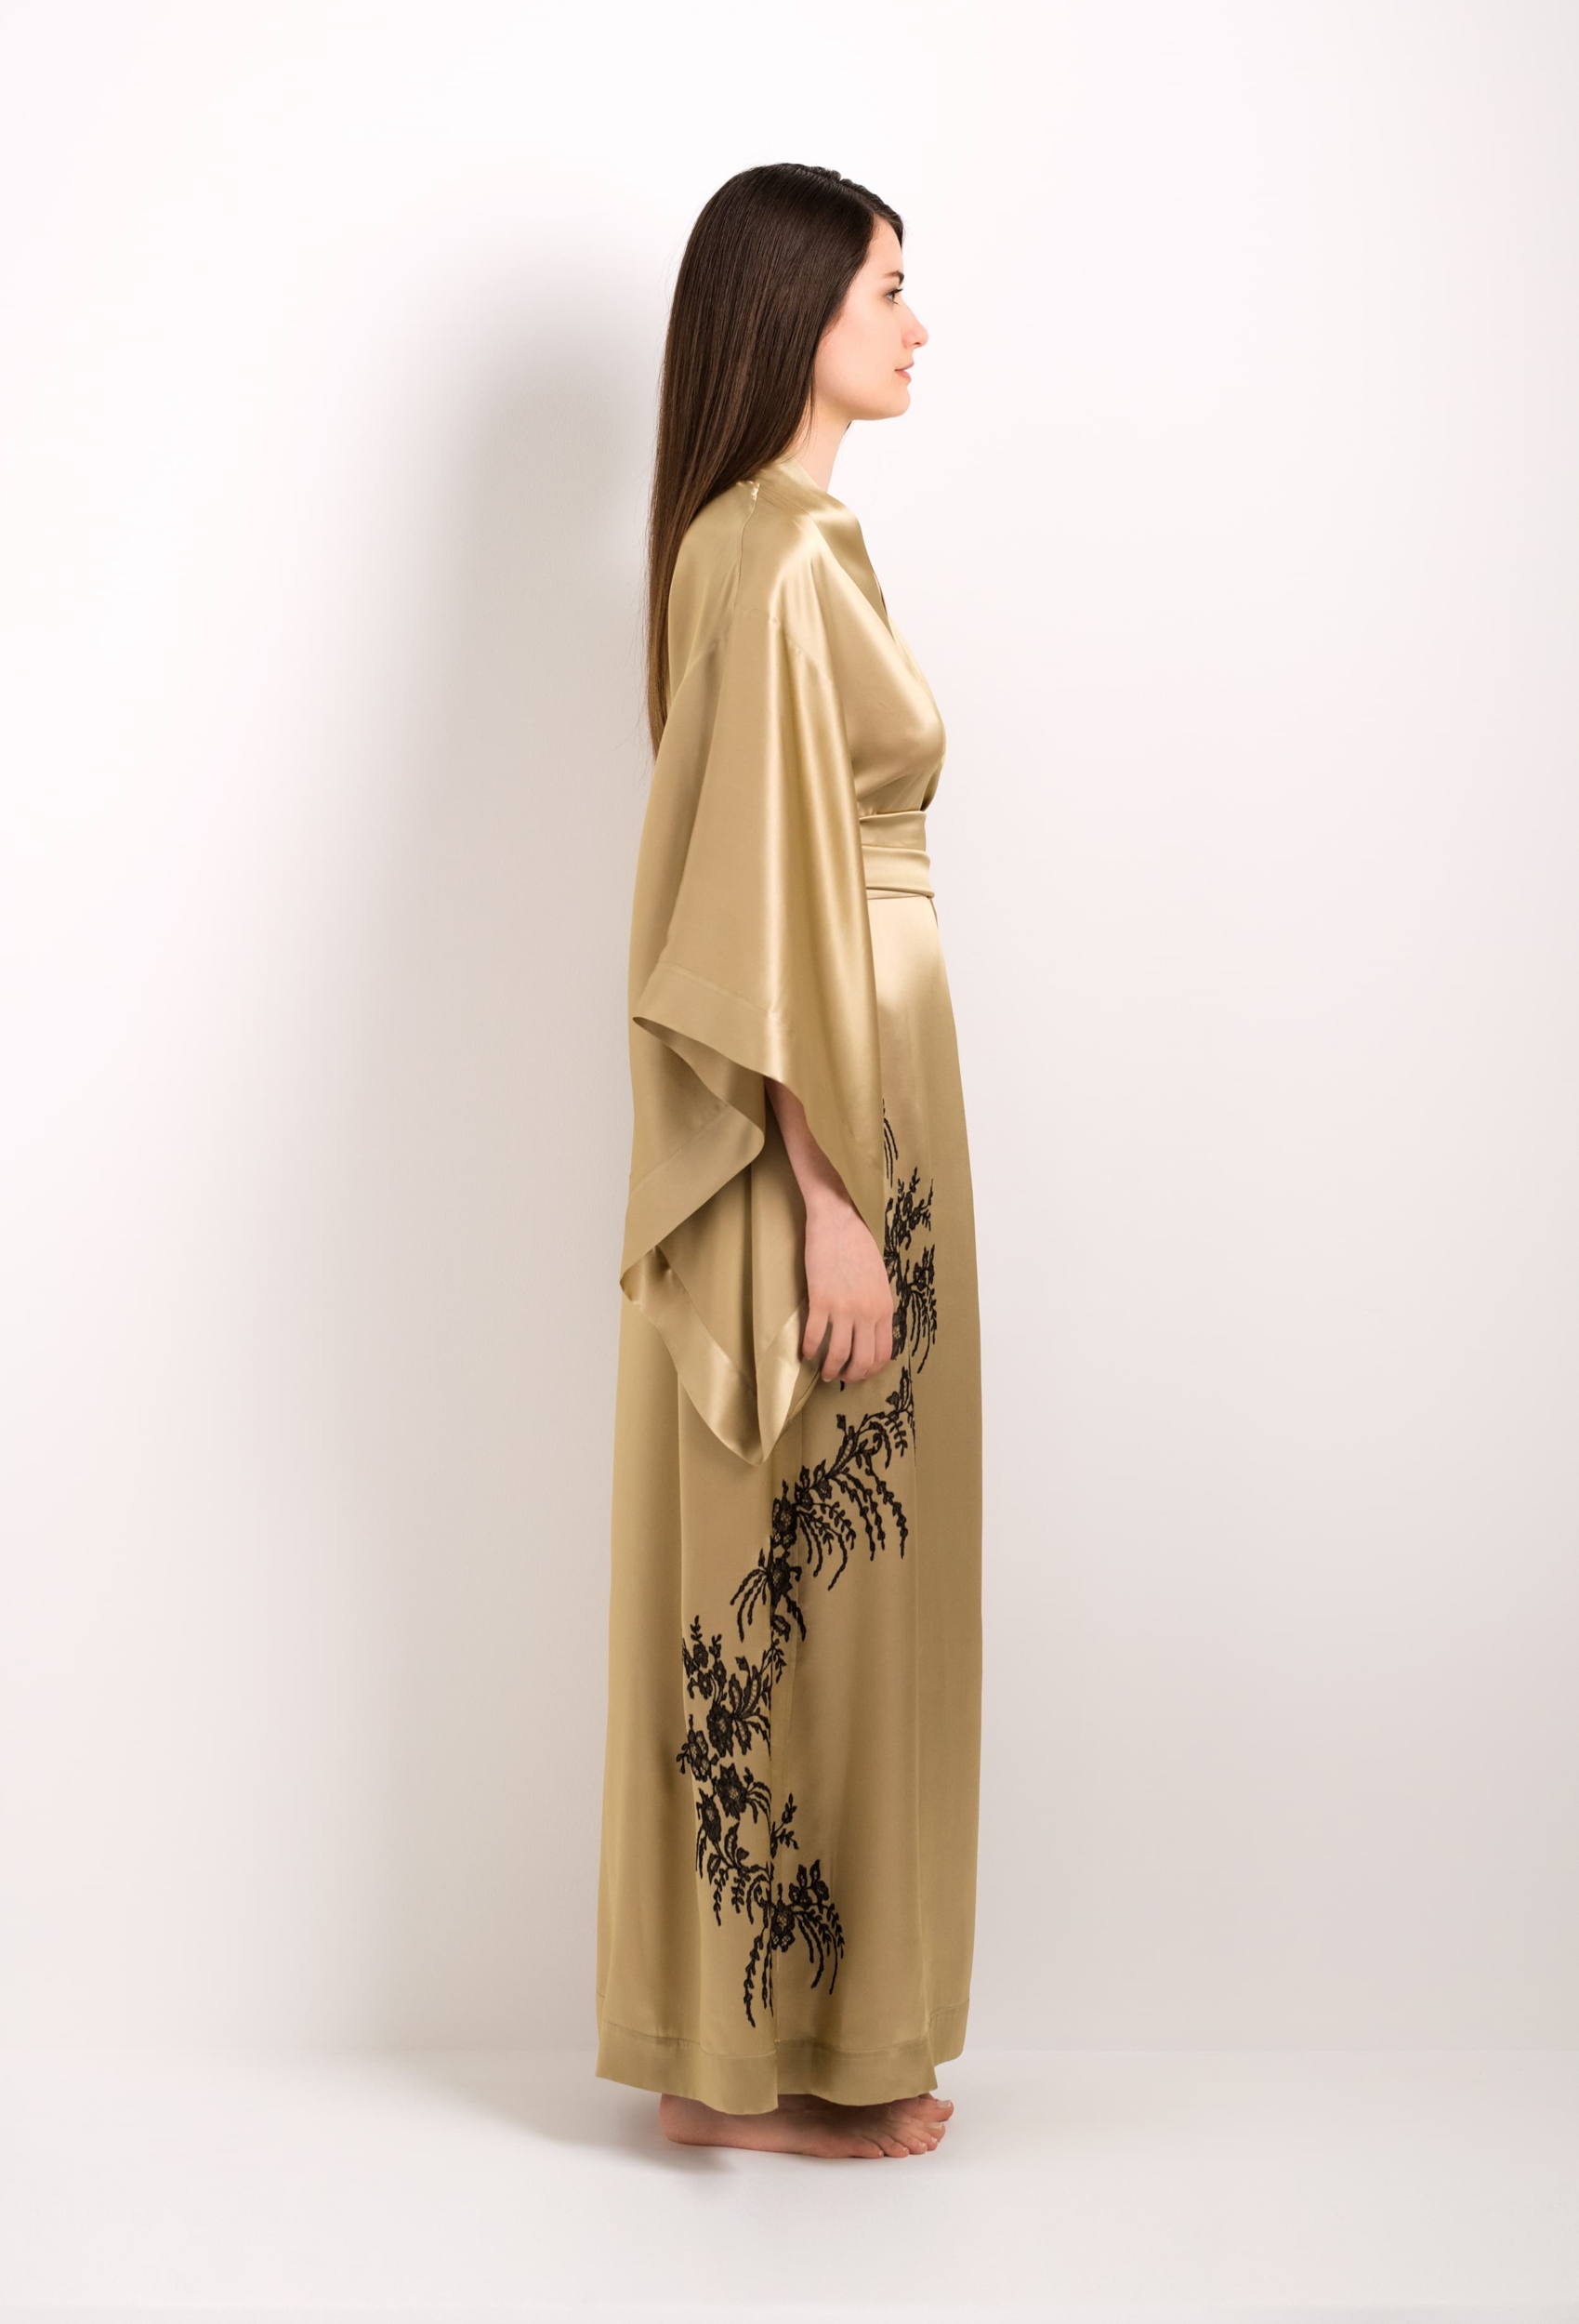 Long silk kimono Carine black Gilson lace - - Caudry gold and Venise